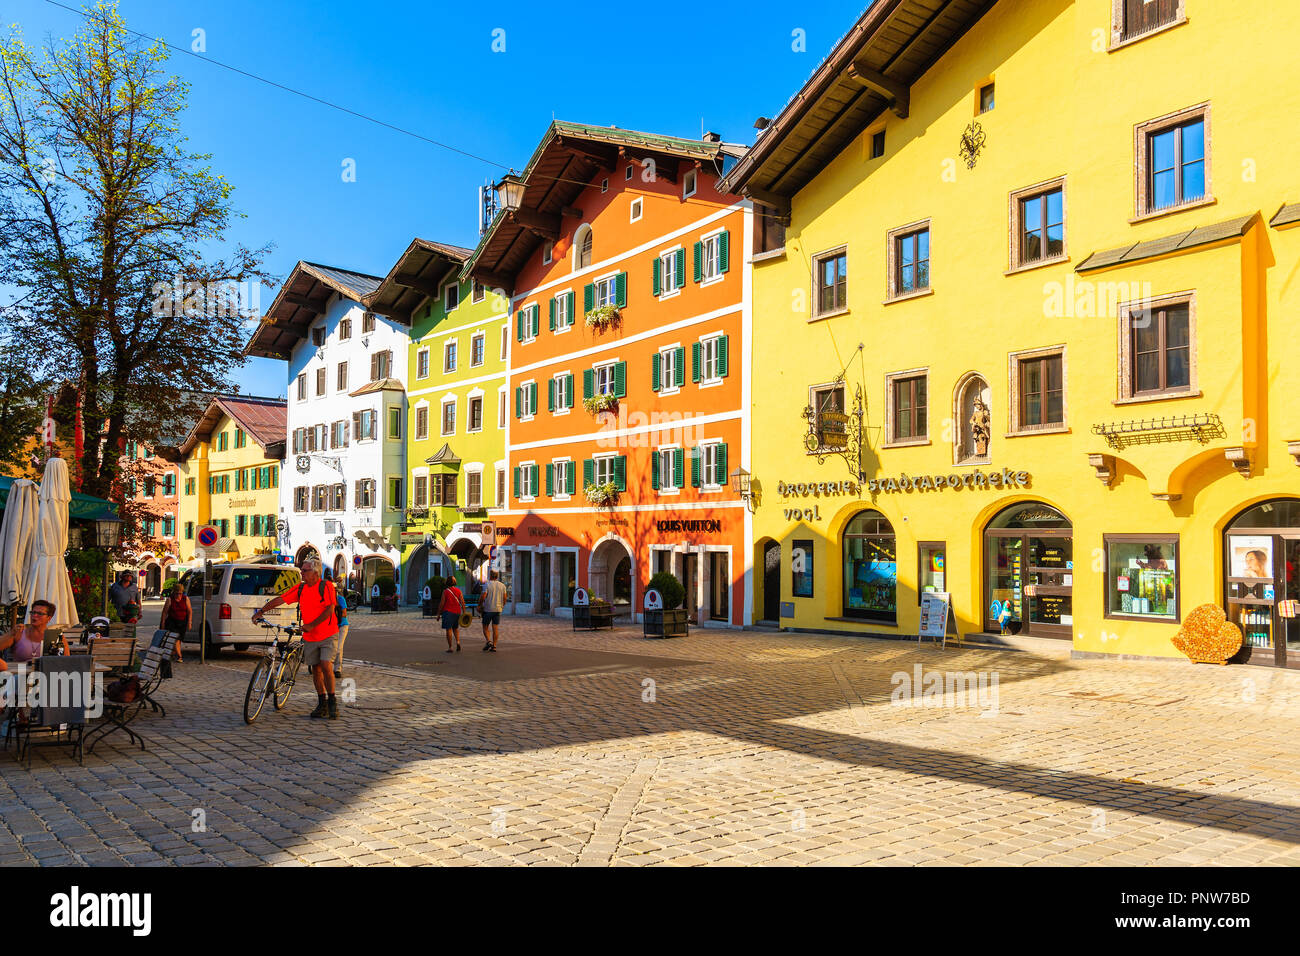 KITZBUHEL TOWN, AUSTRIA - JUL 30, 2018: Houses on street in Kitzbuhel town in summertime. It is one of the most famous Austrian winter sports destinat Stock Photo